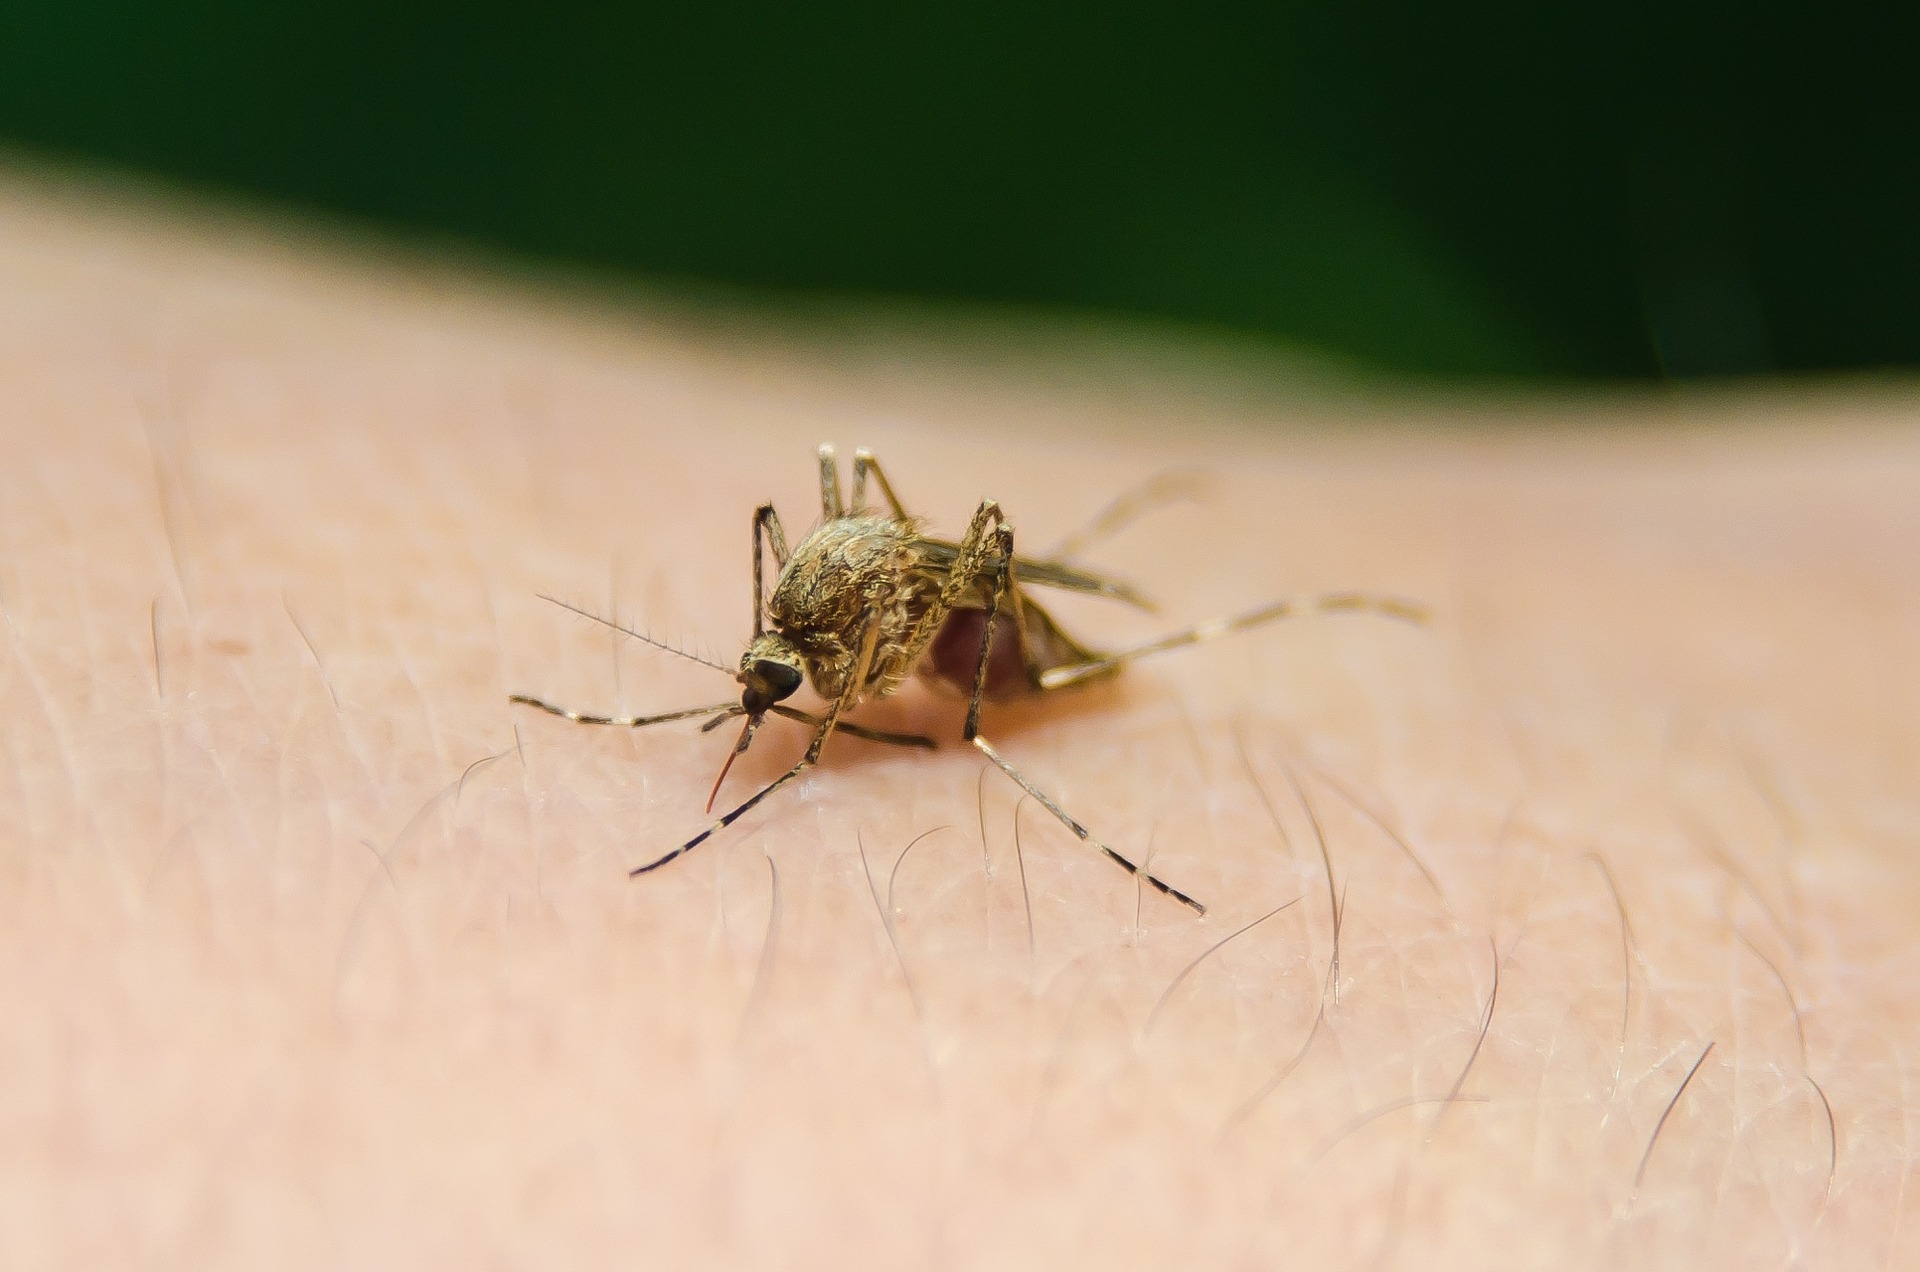 Penyebab malaria